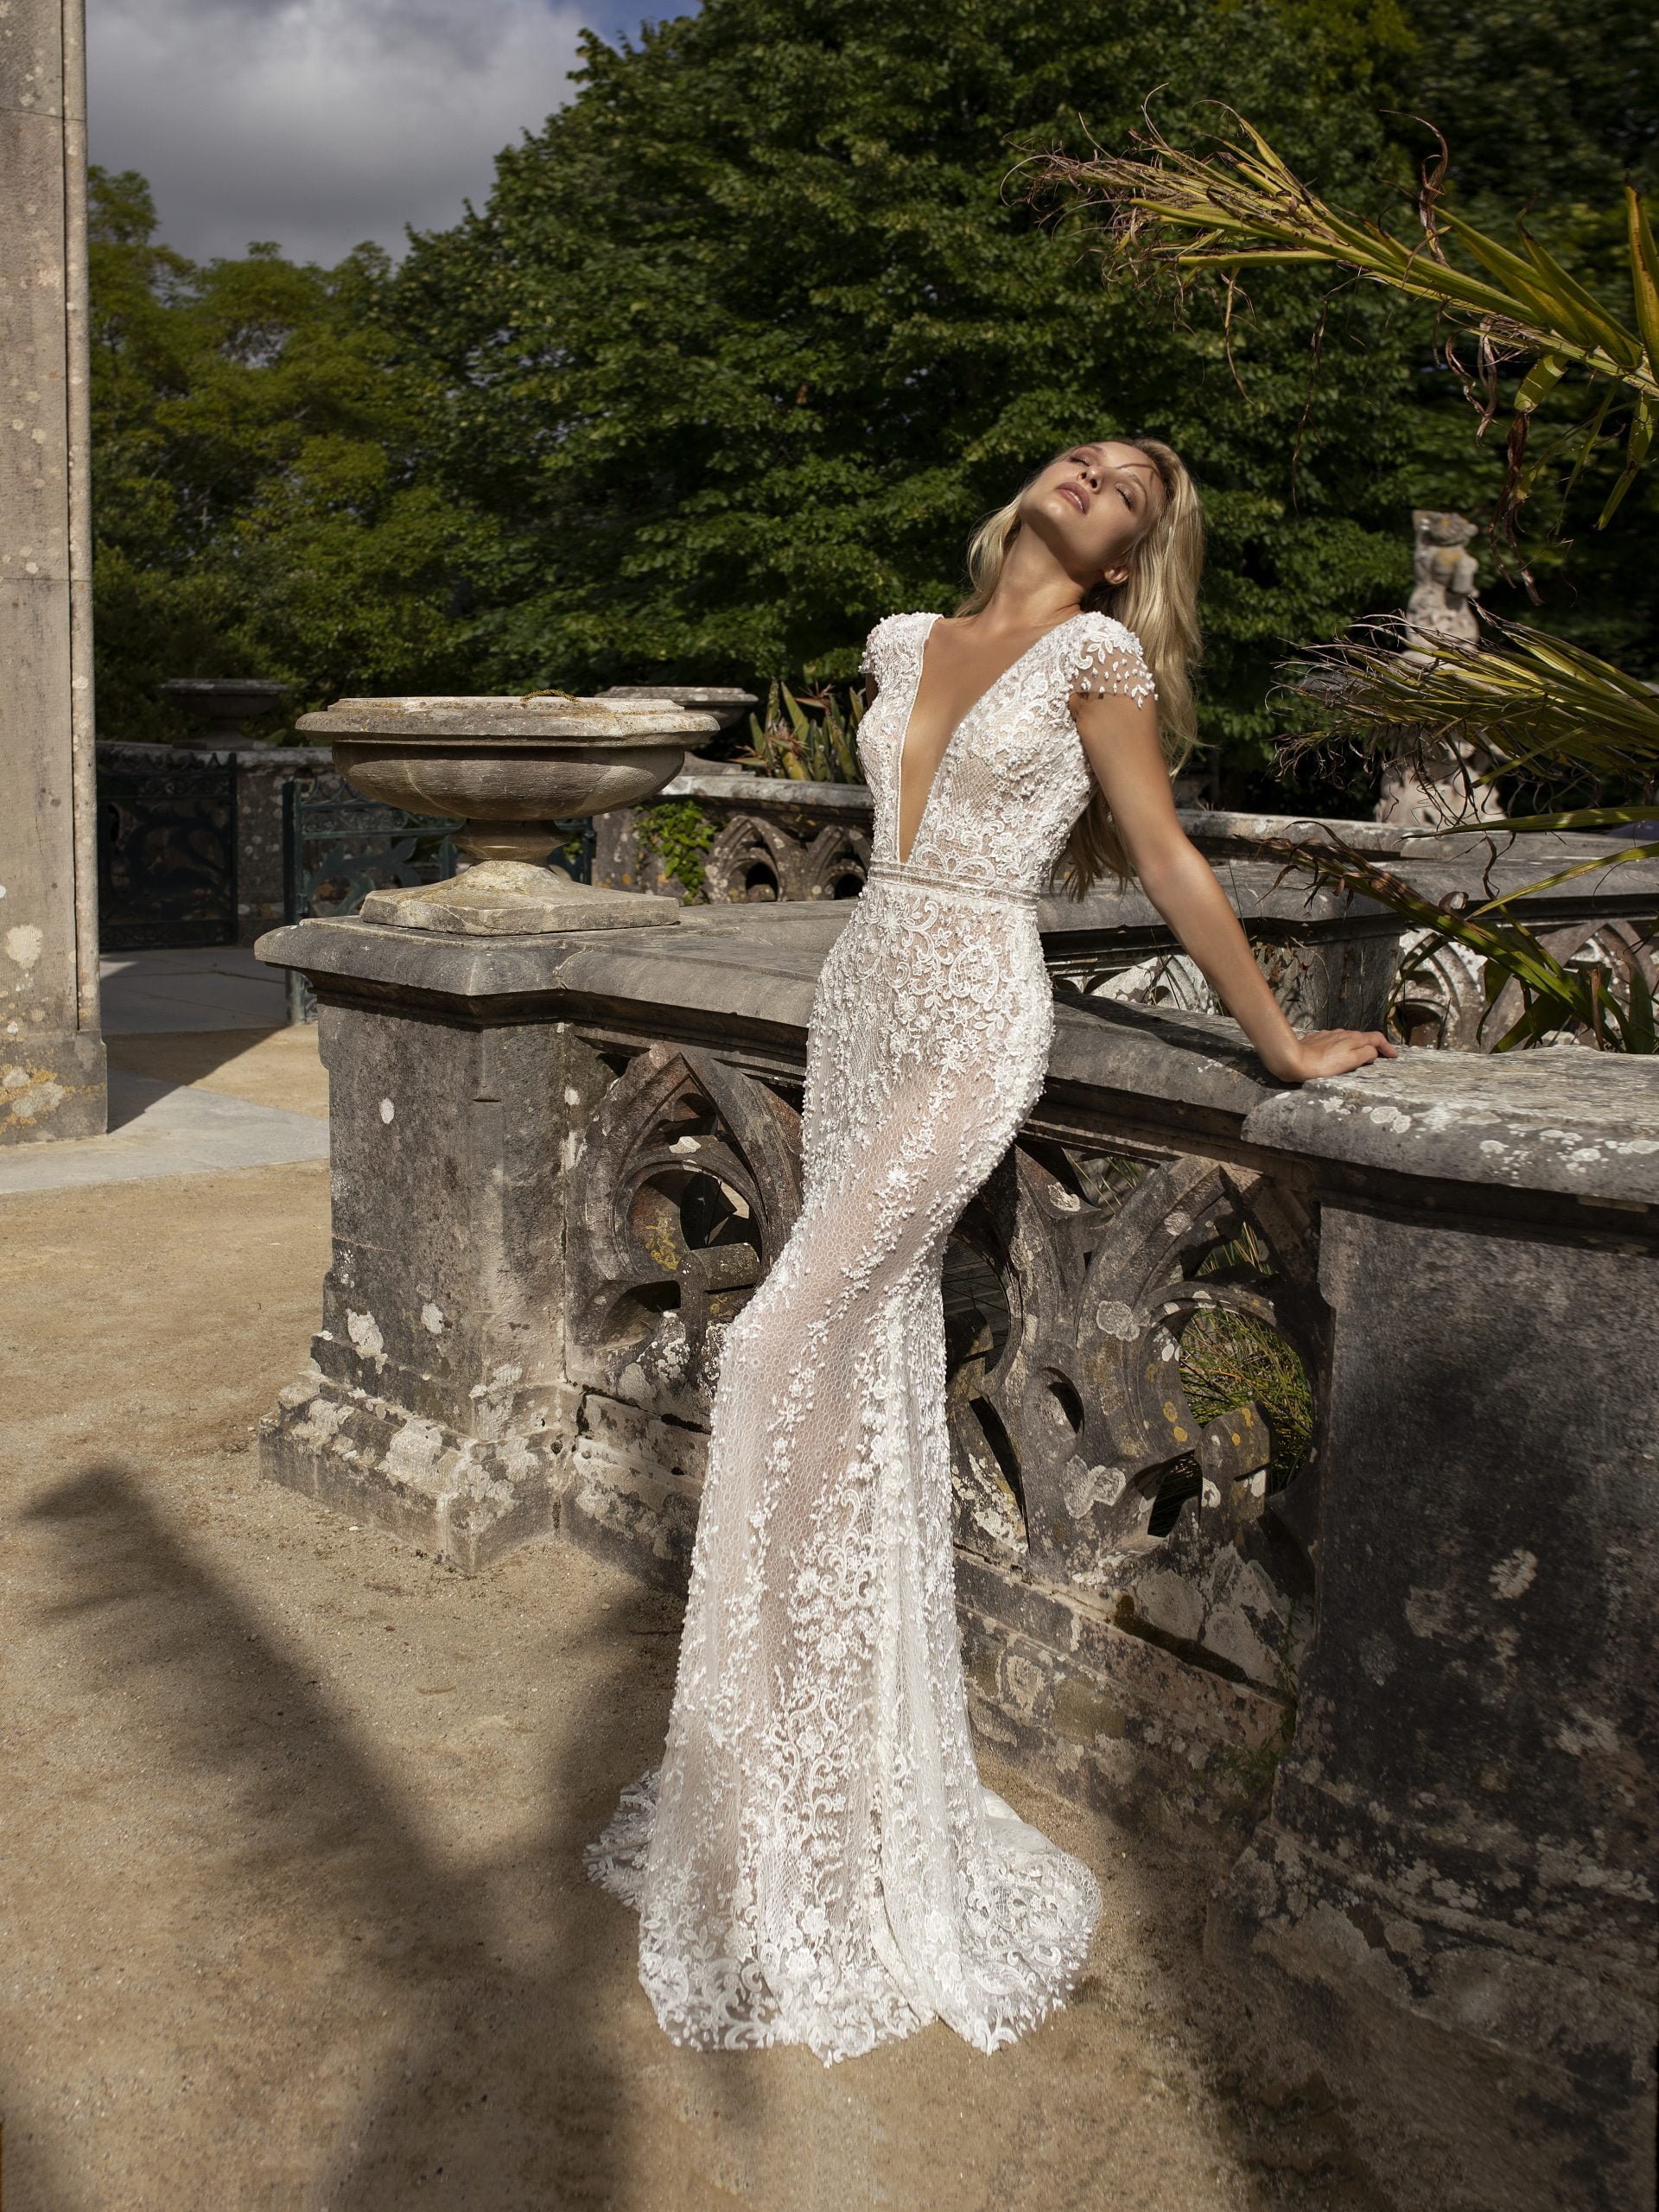 blanc-de-blanc-bridal-boutique-pittsburgh-cleveland-dress-wedding-gown-EVA-LENDEL-Flame.jpeg